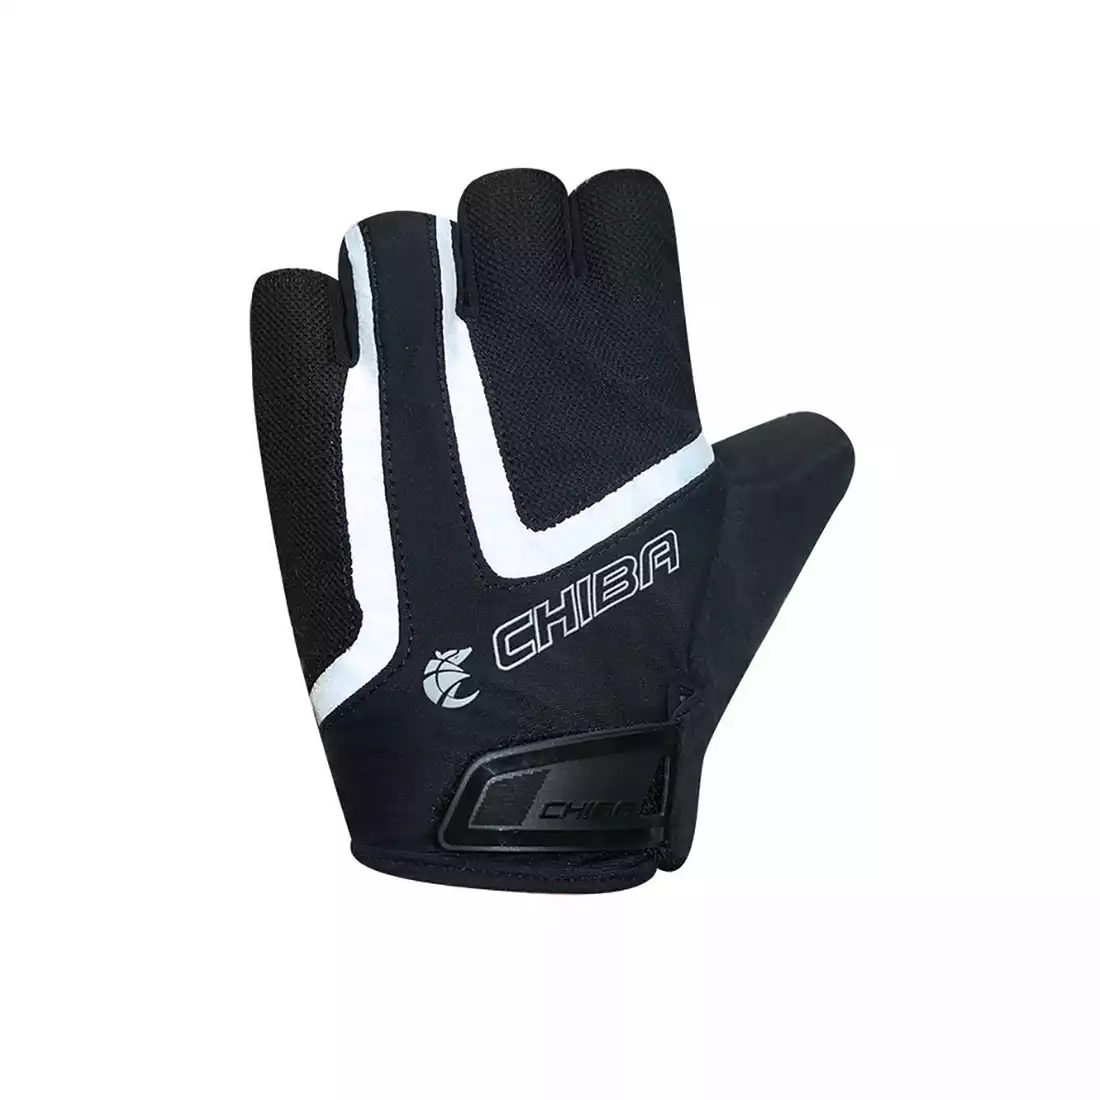 CHIBA GEL AIR REFLEX Cycling gloves, black